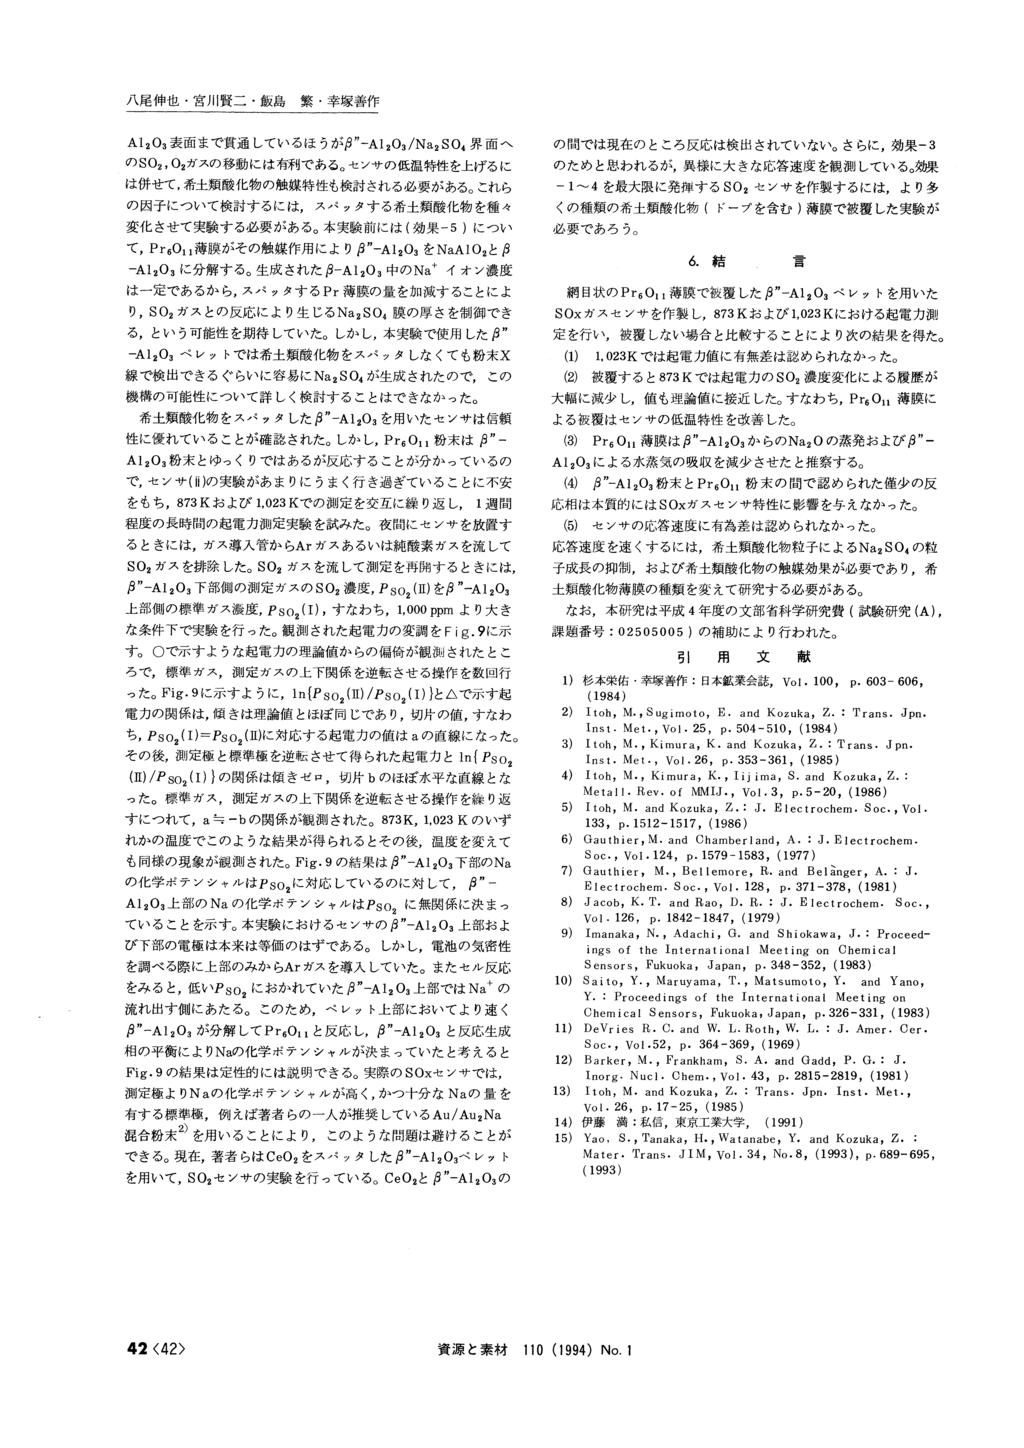 2) Itoh, M., Sugimoto, E. and Kozuka, Z.: Trans. Jpn. Inst. Met., Vol.25, p.504-510, (1984) 3) Itoh, M., Kimura, K. and Kozuka, Z.: Trans. Jpn. Inst. Met., Vol.26, p.353-361, (1985) 4) Itoh, M.